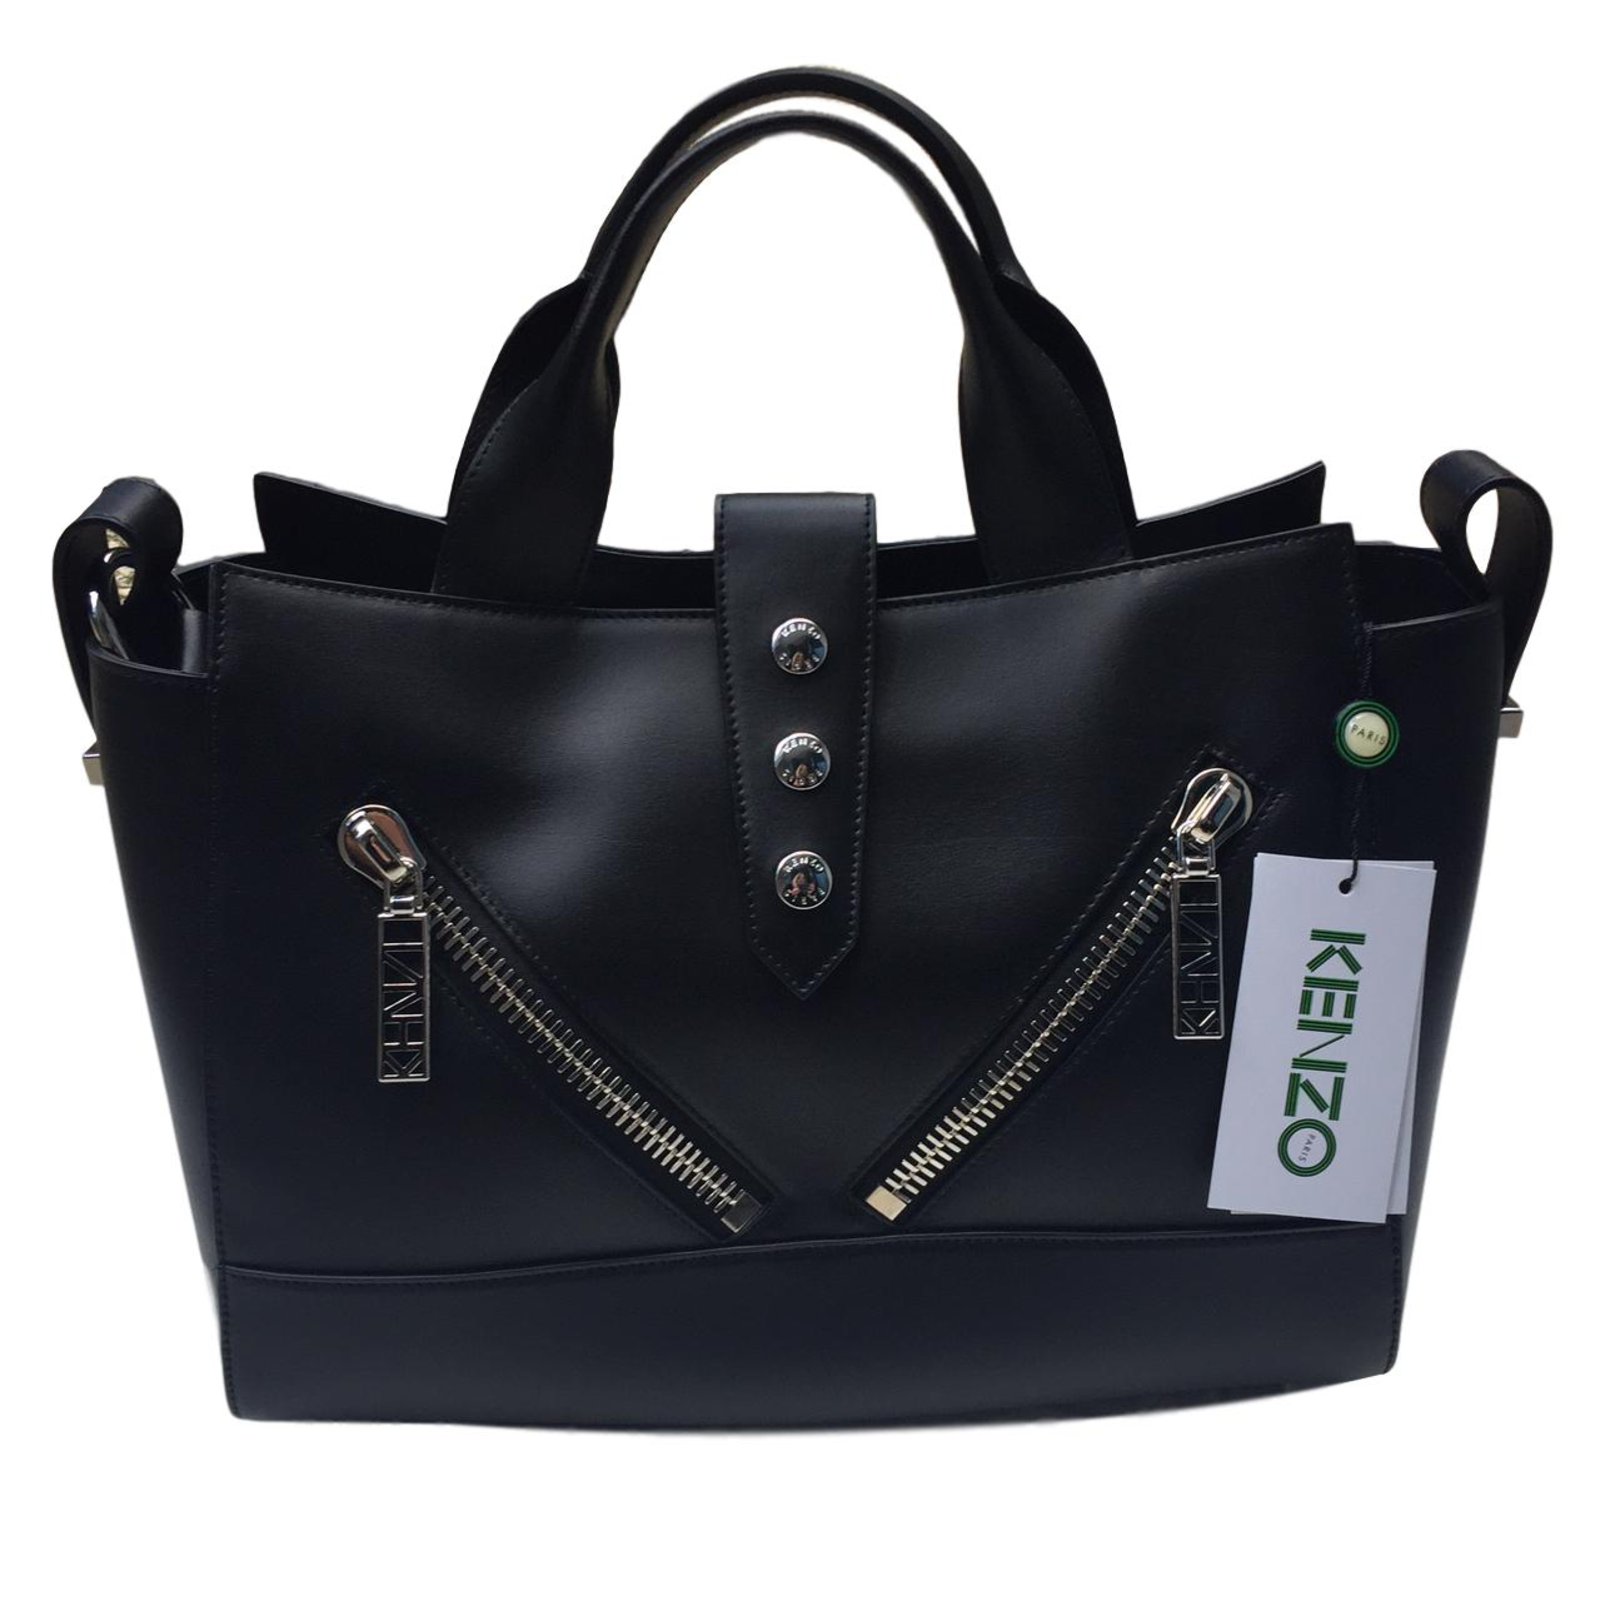 Kenzo Handbag Handbags Other Black ref 